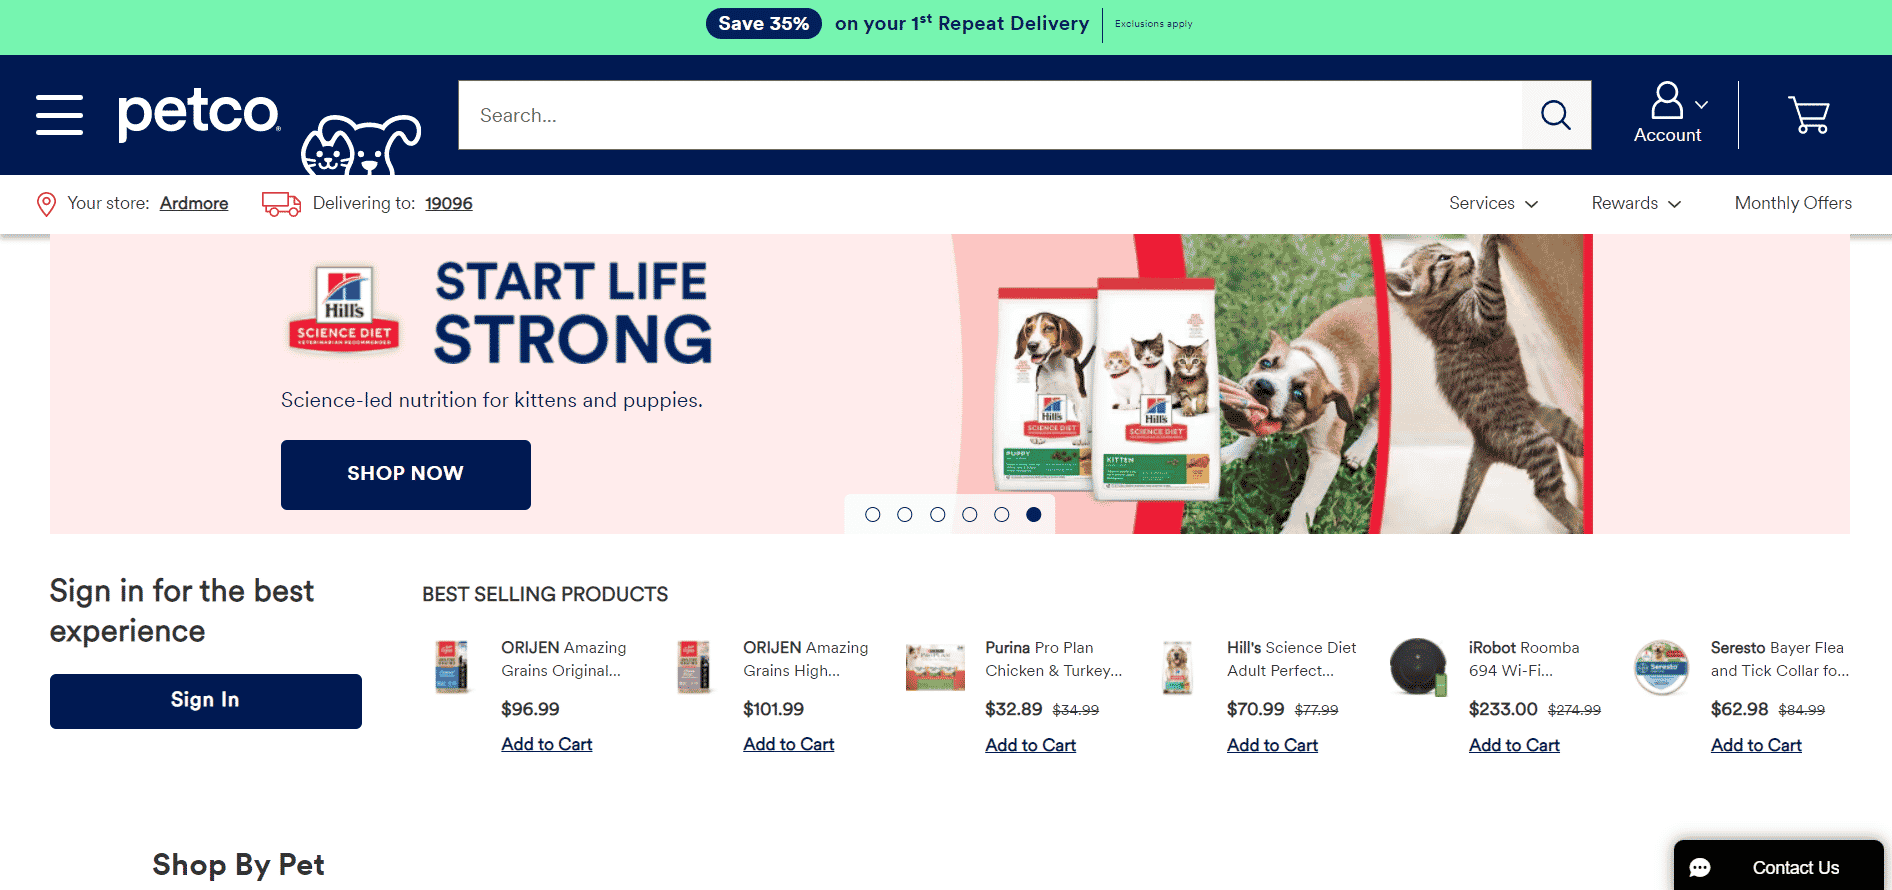 Official website of Petco pet brand